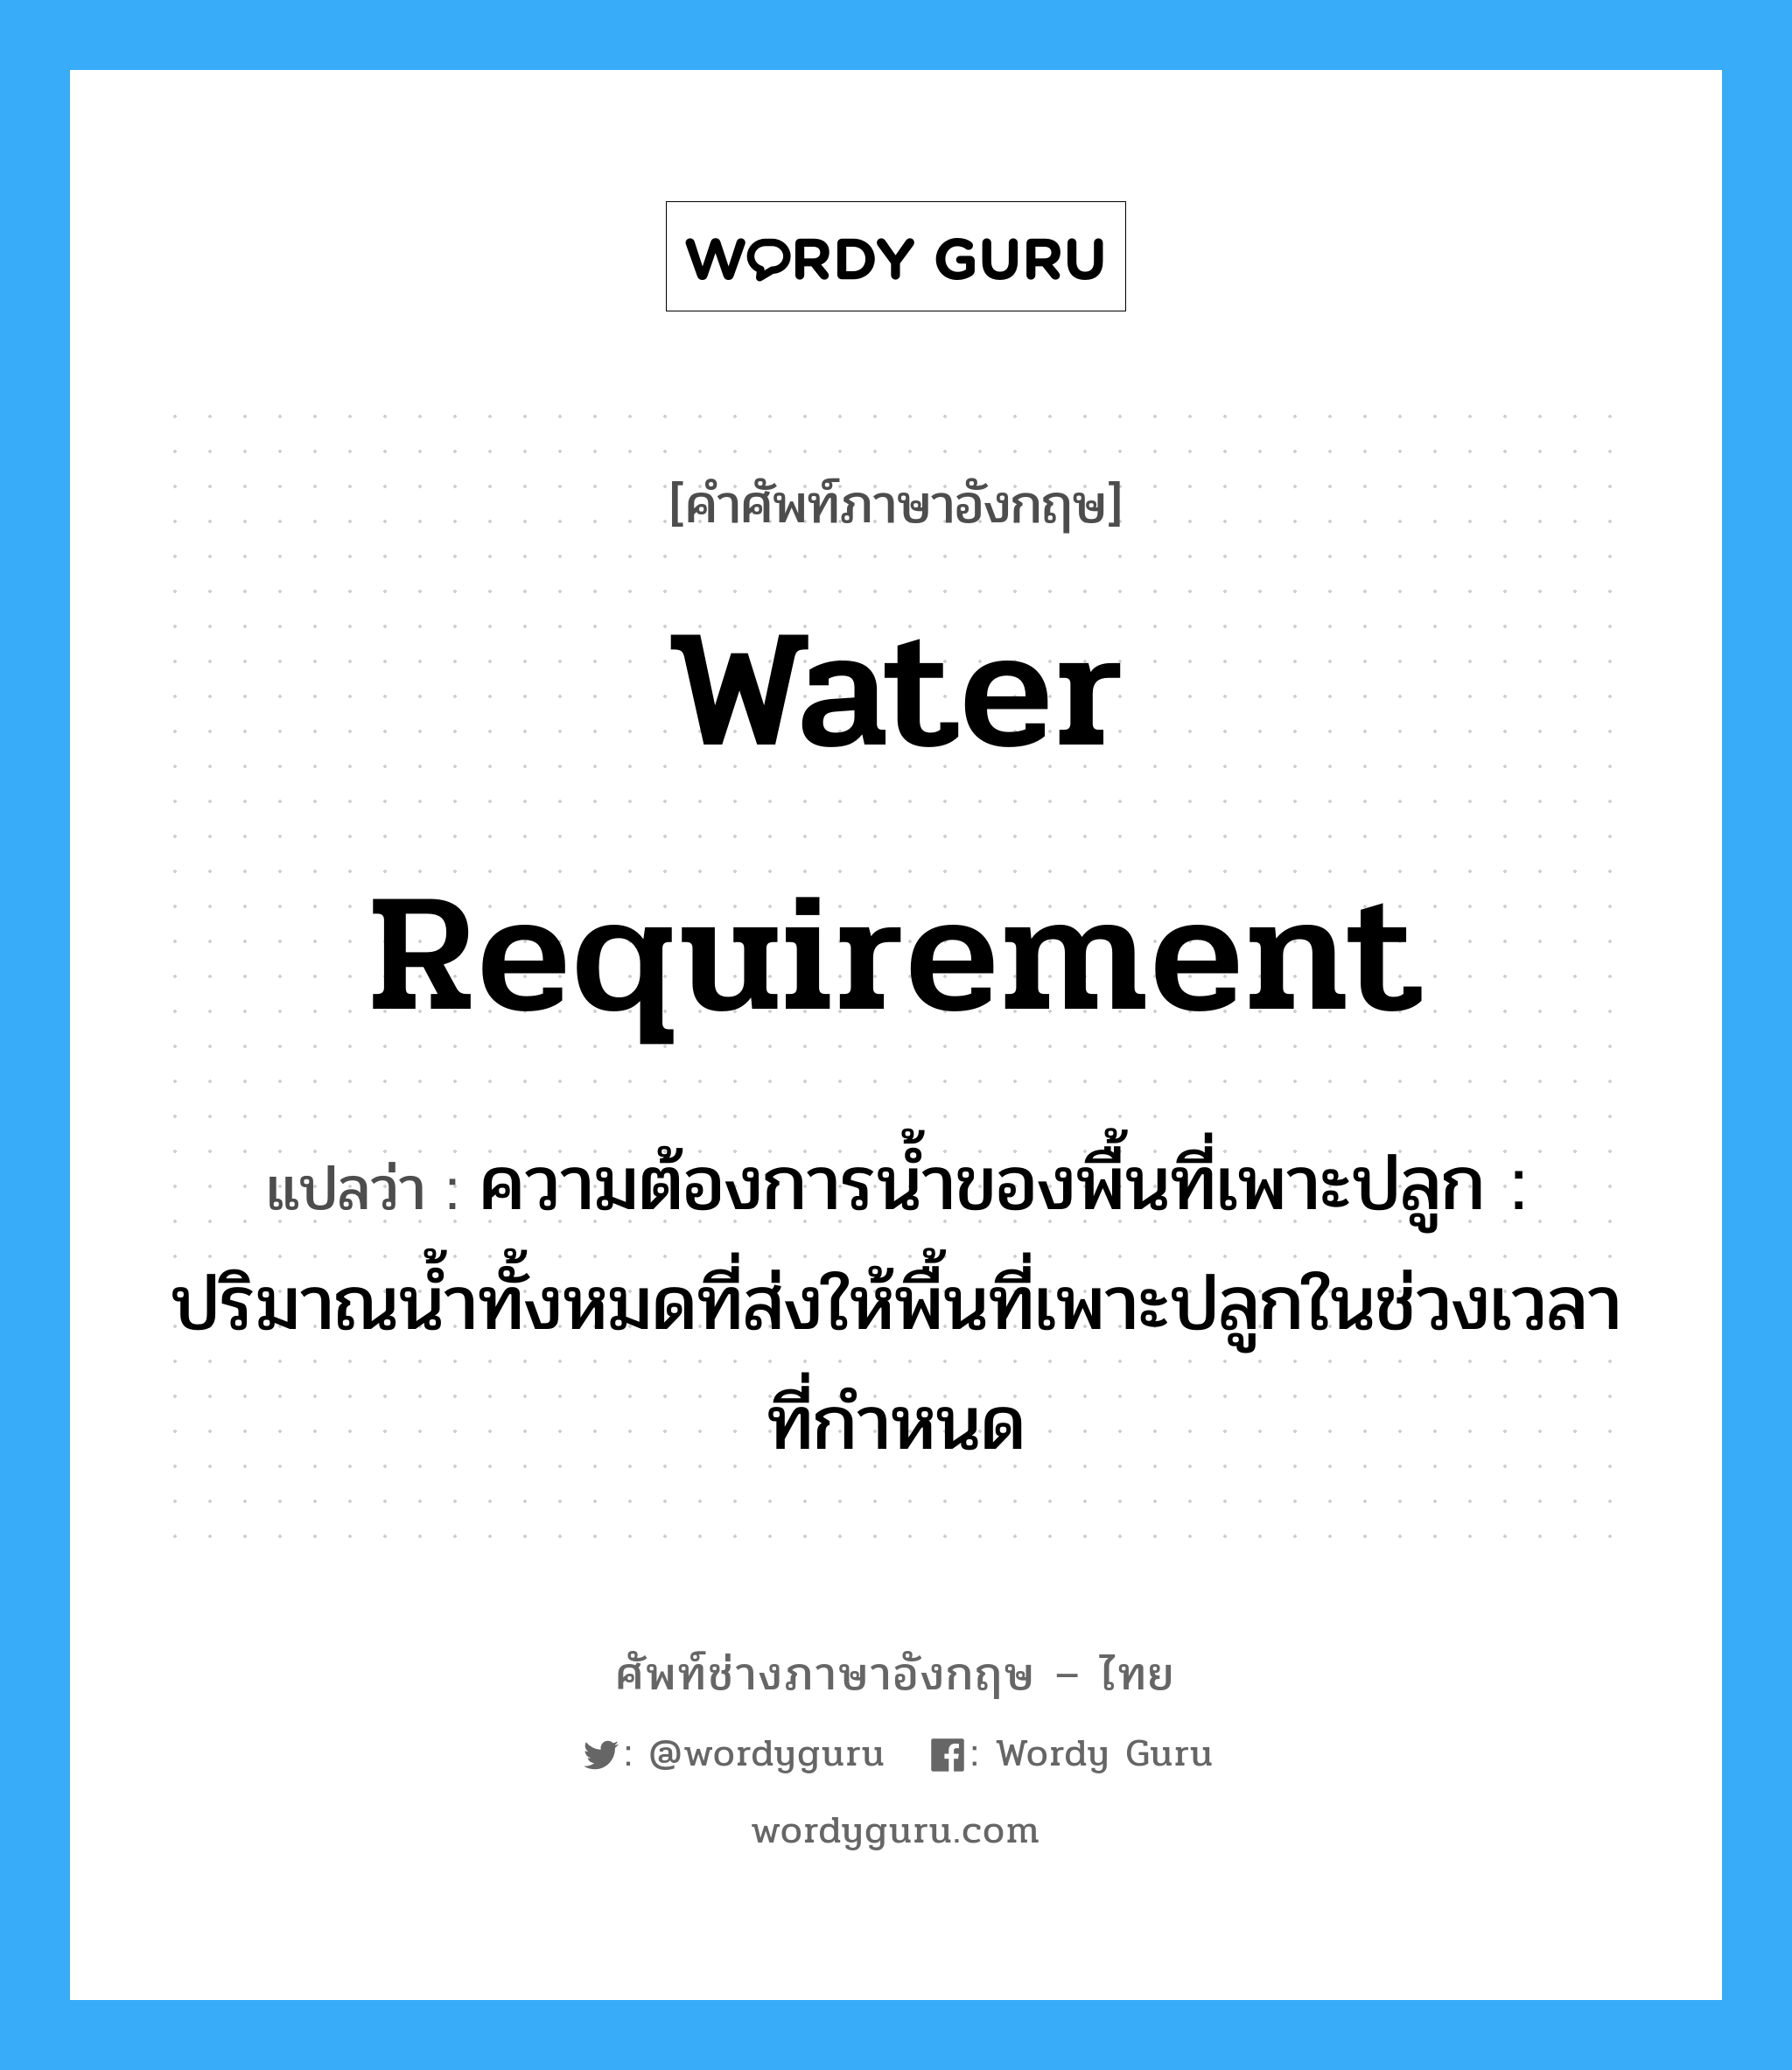 water requirement แปลว่า?, คำศัพท์ช่างภาษาอังกฤษ - ไทย water requirement คำศัพท์ภาษาอังกฤษ water requirement แปลว่า ความต้องการน้ำของพื้นที่เพาะปลูก : ปริมาณน้ำทั้งหมดที่ส่งให้พื้นที่เพาะปลูกในช่วงเวลาที่กำหนด